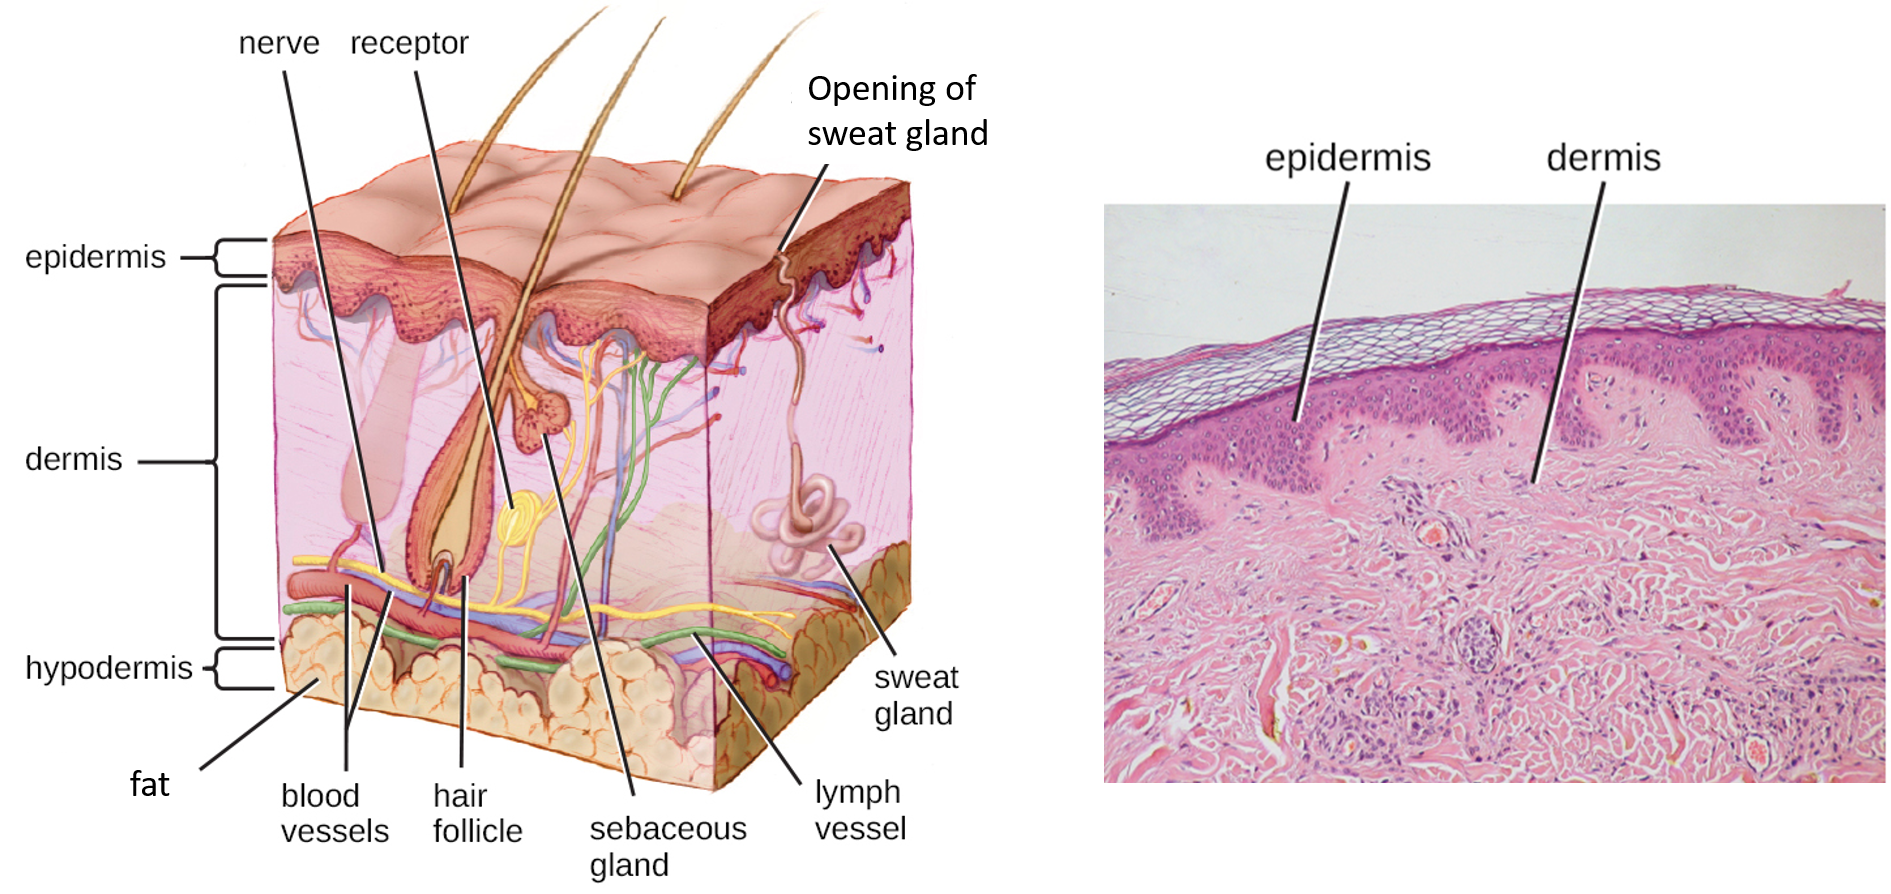 layers of skin - epidermis and dermis